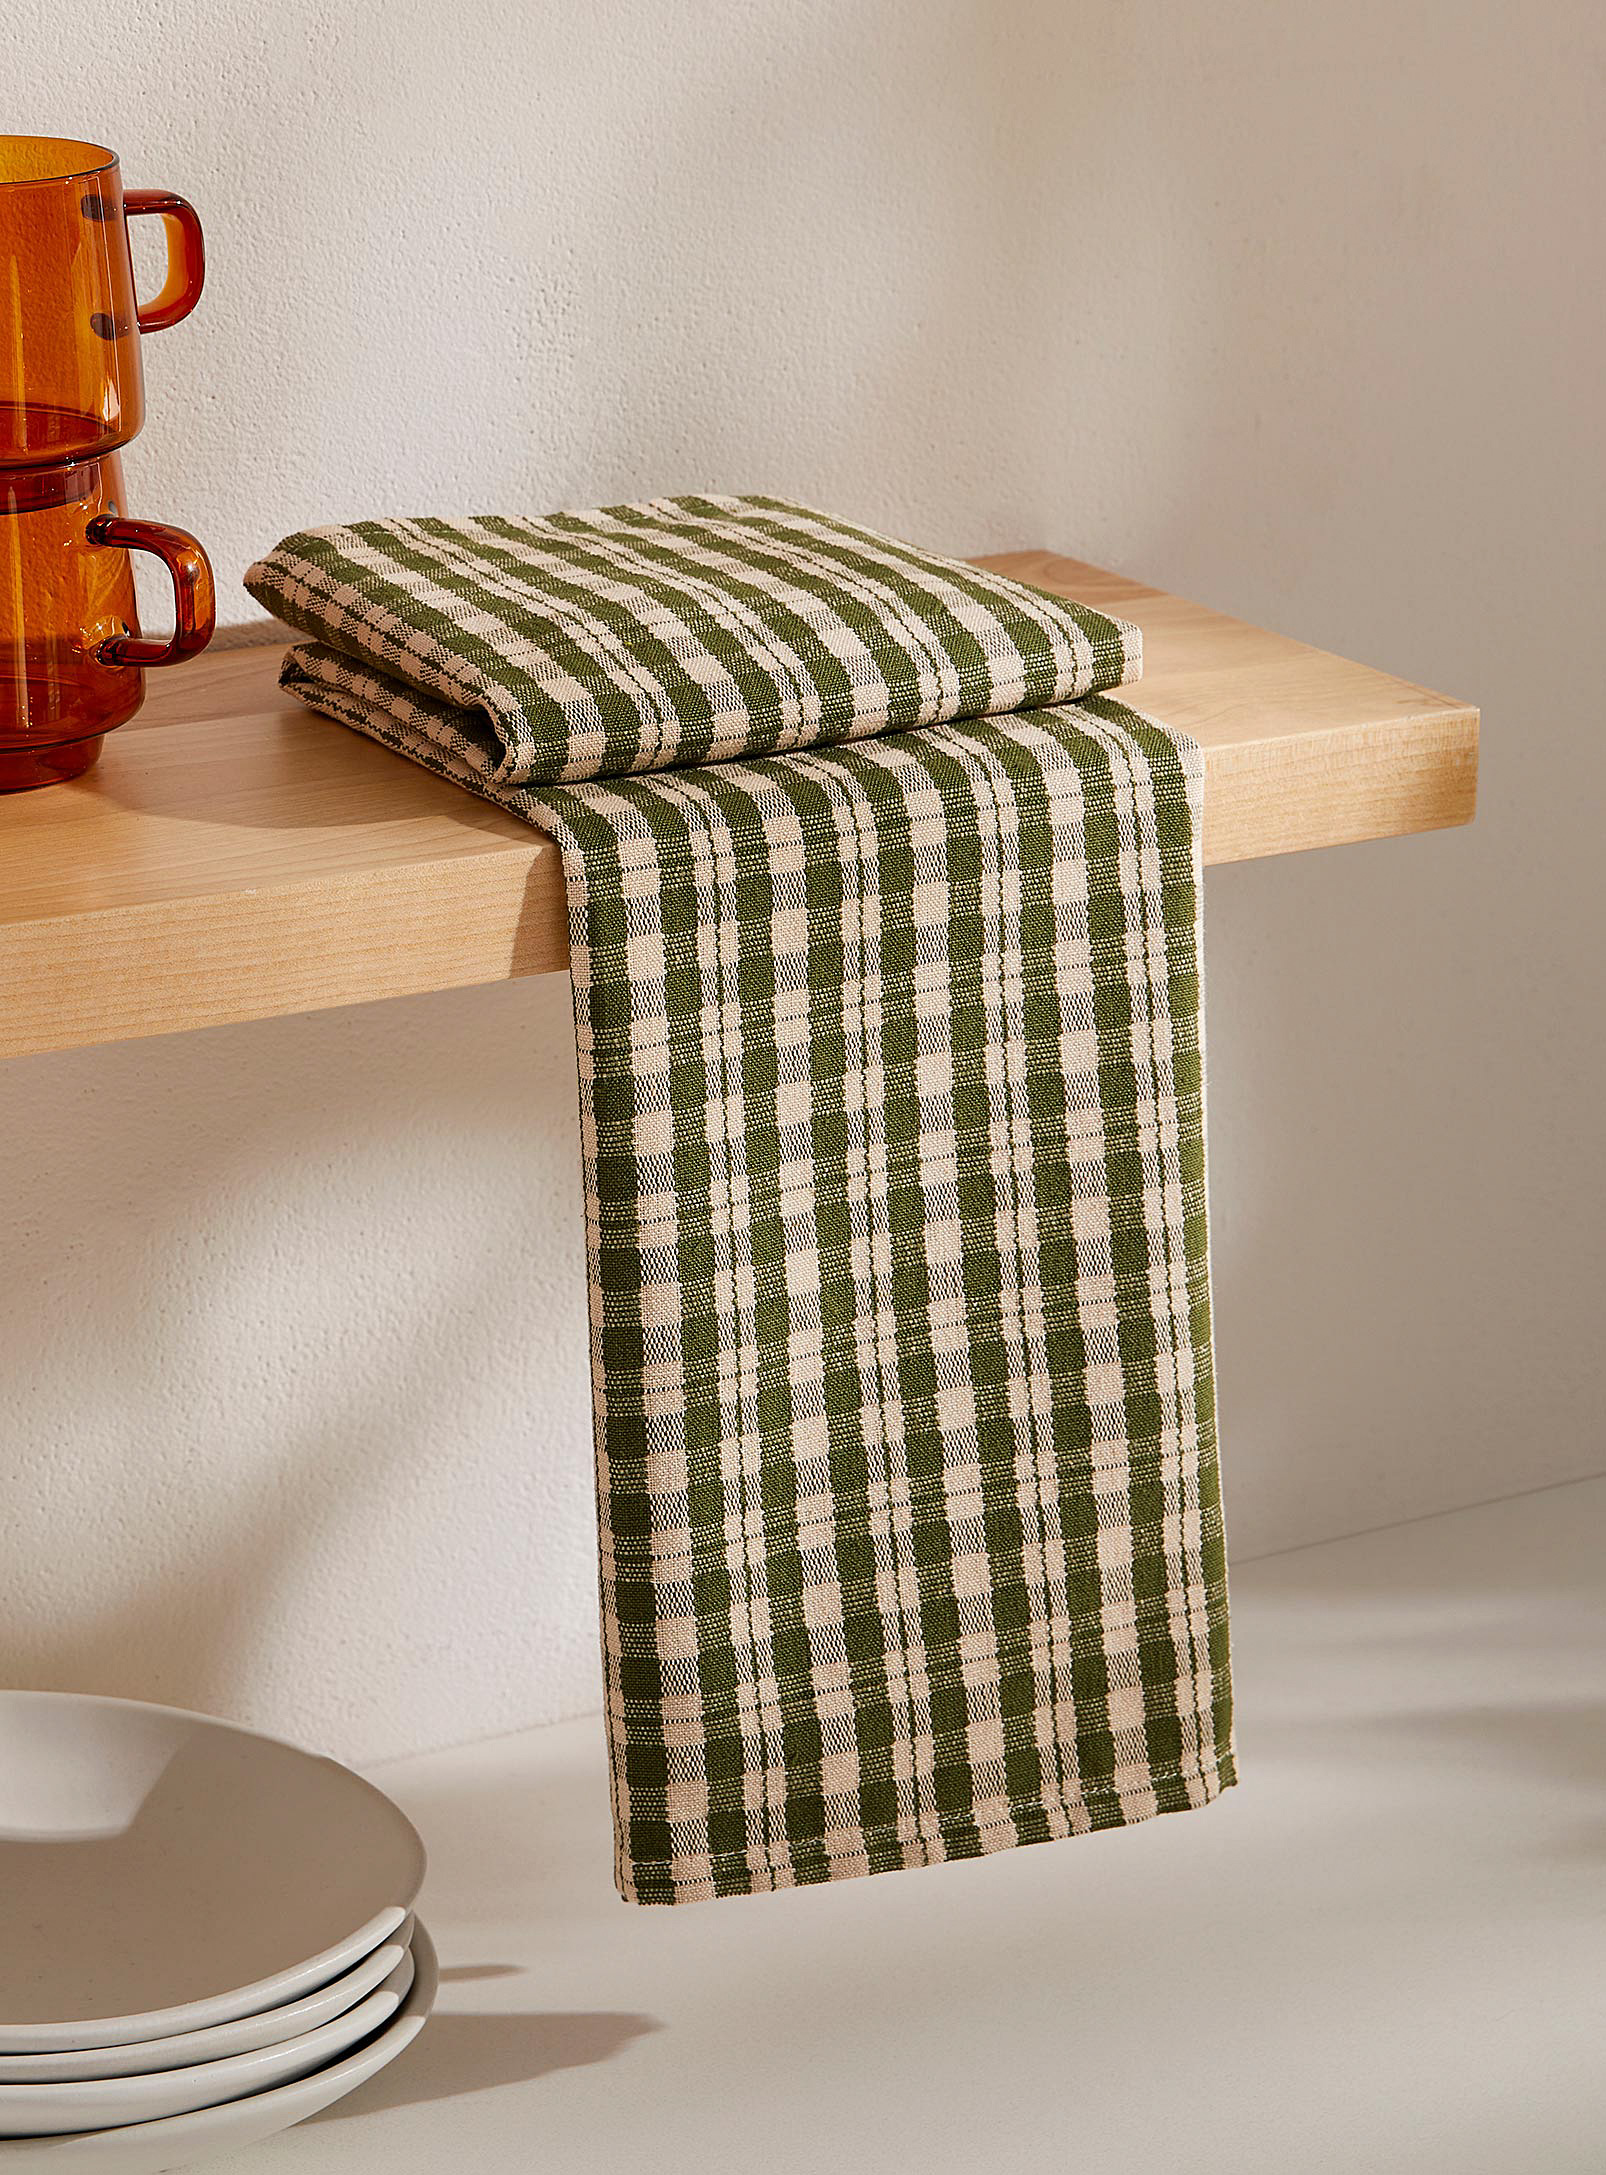 Simons Maison - Olive checkers organic cotton tea towel